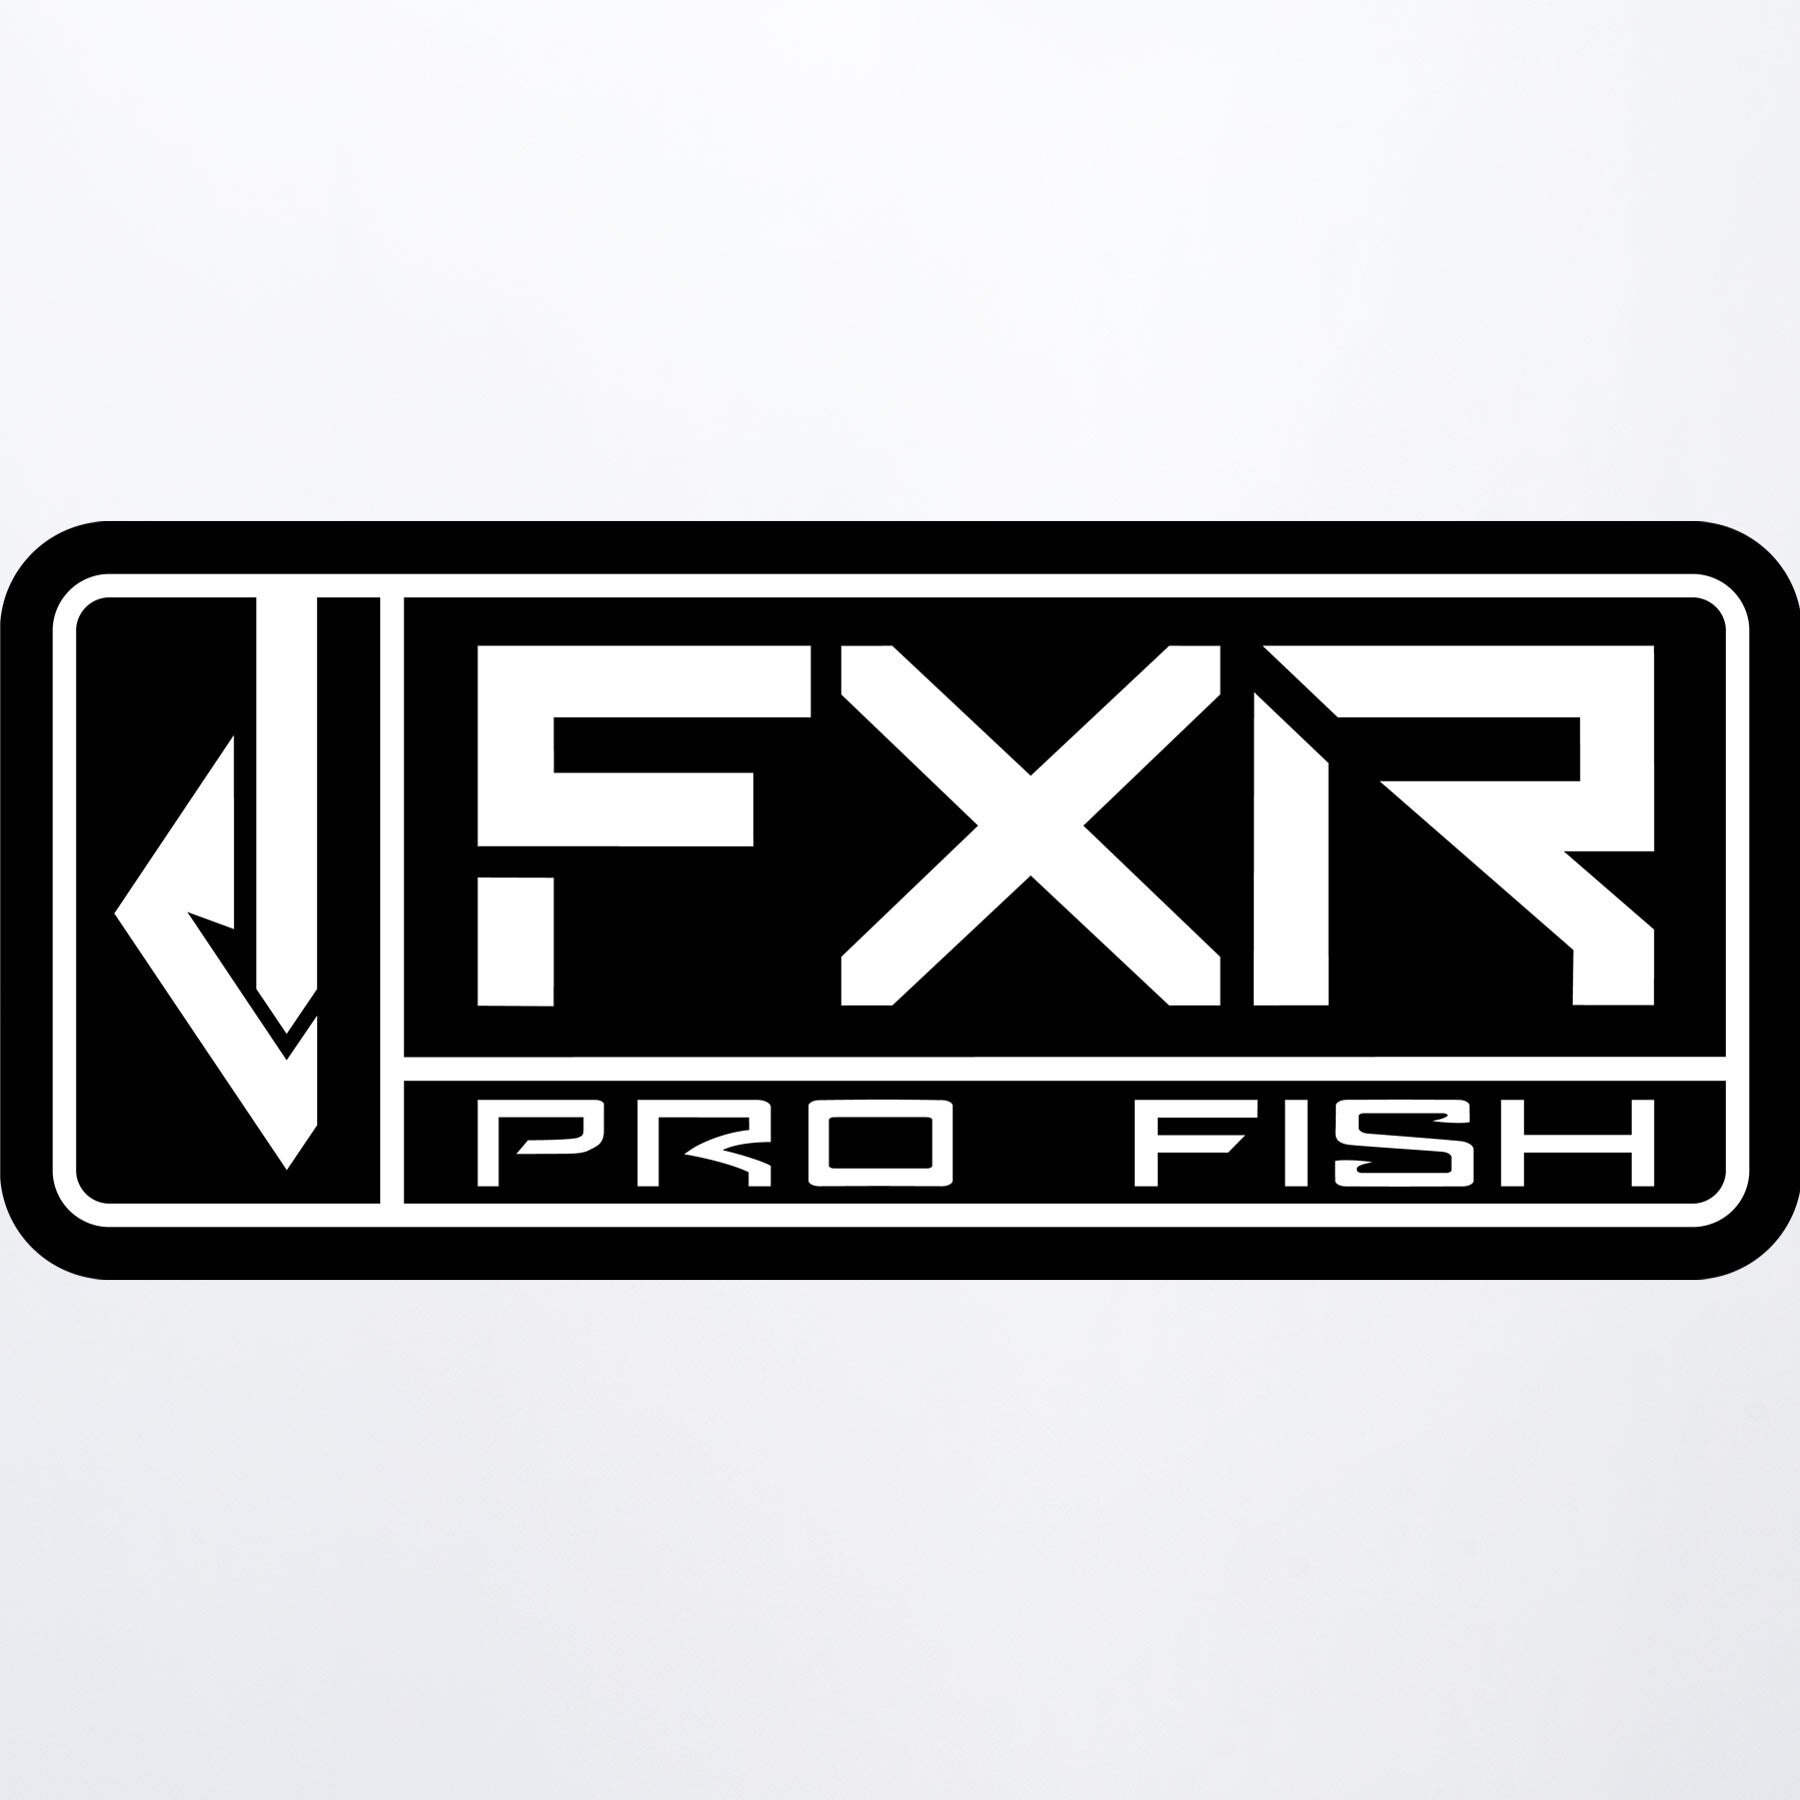 FXR Pro Fish Stickers 6"